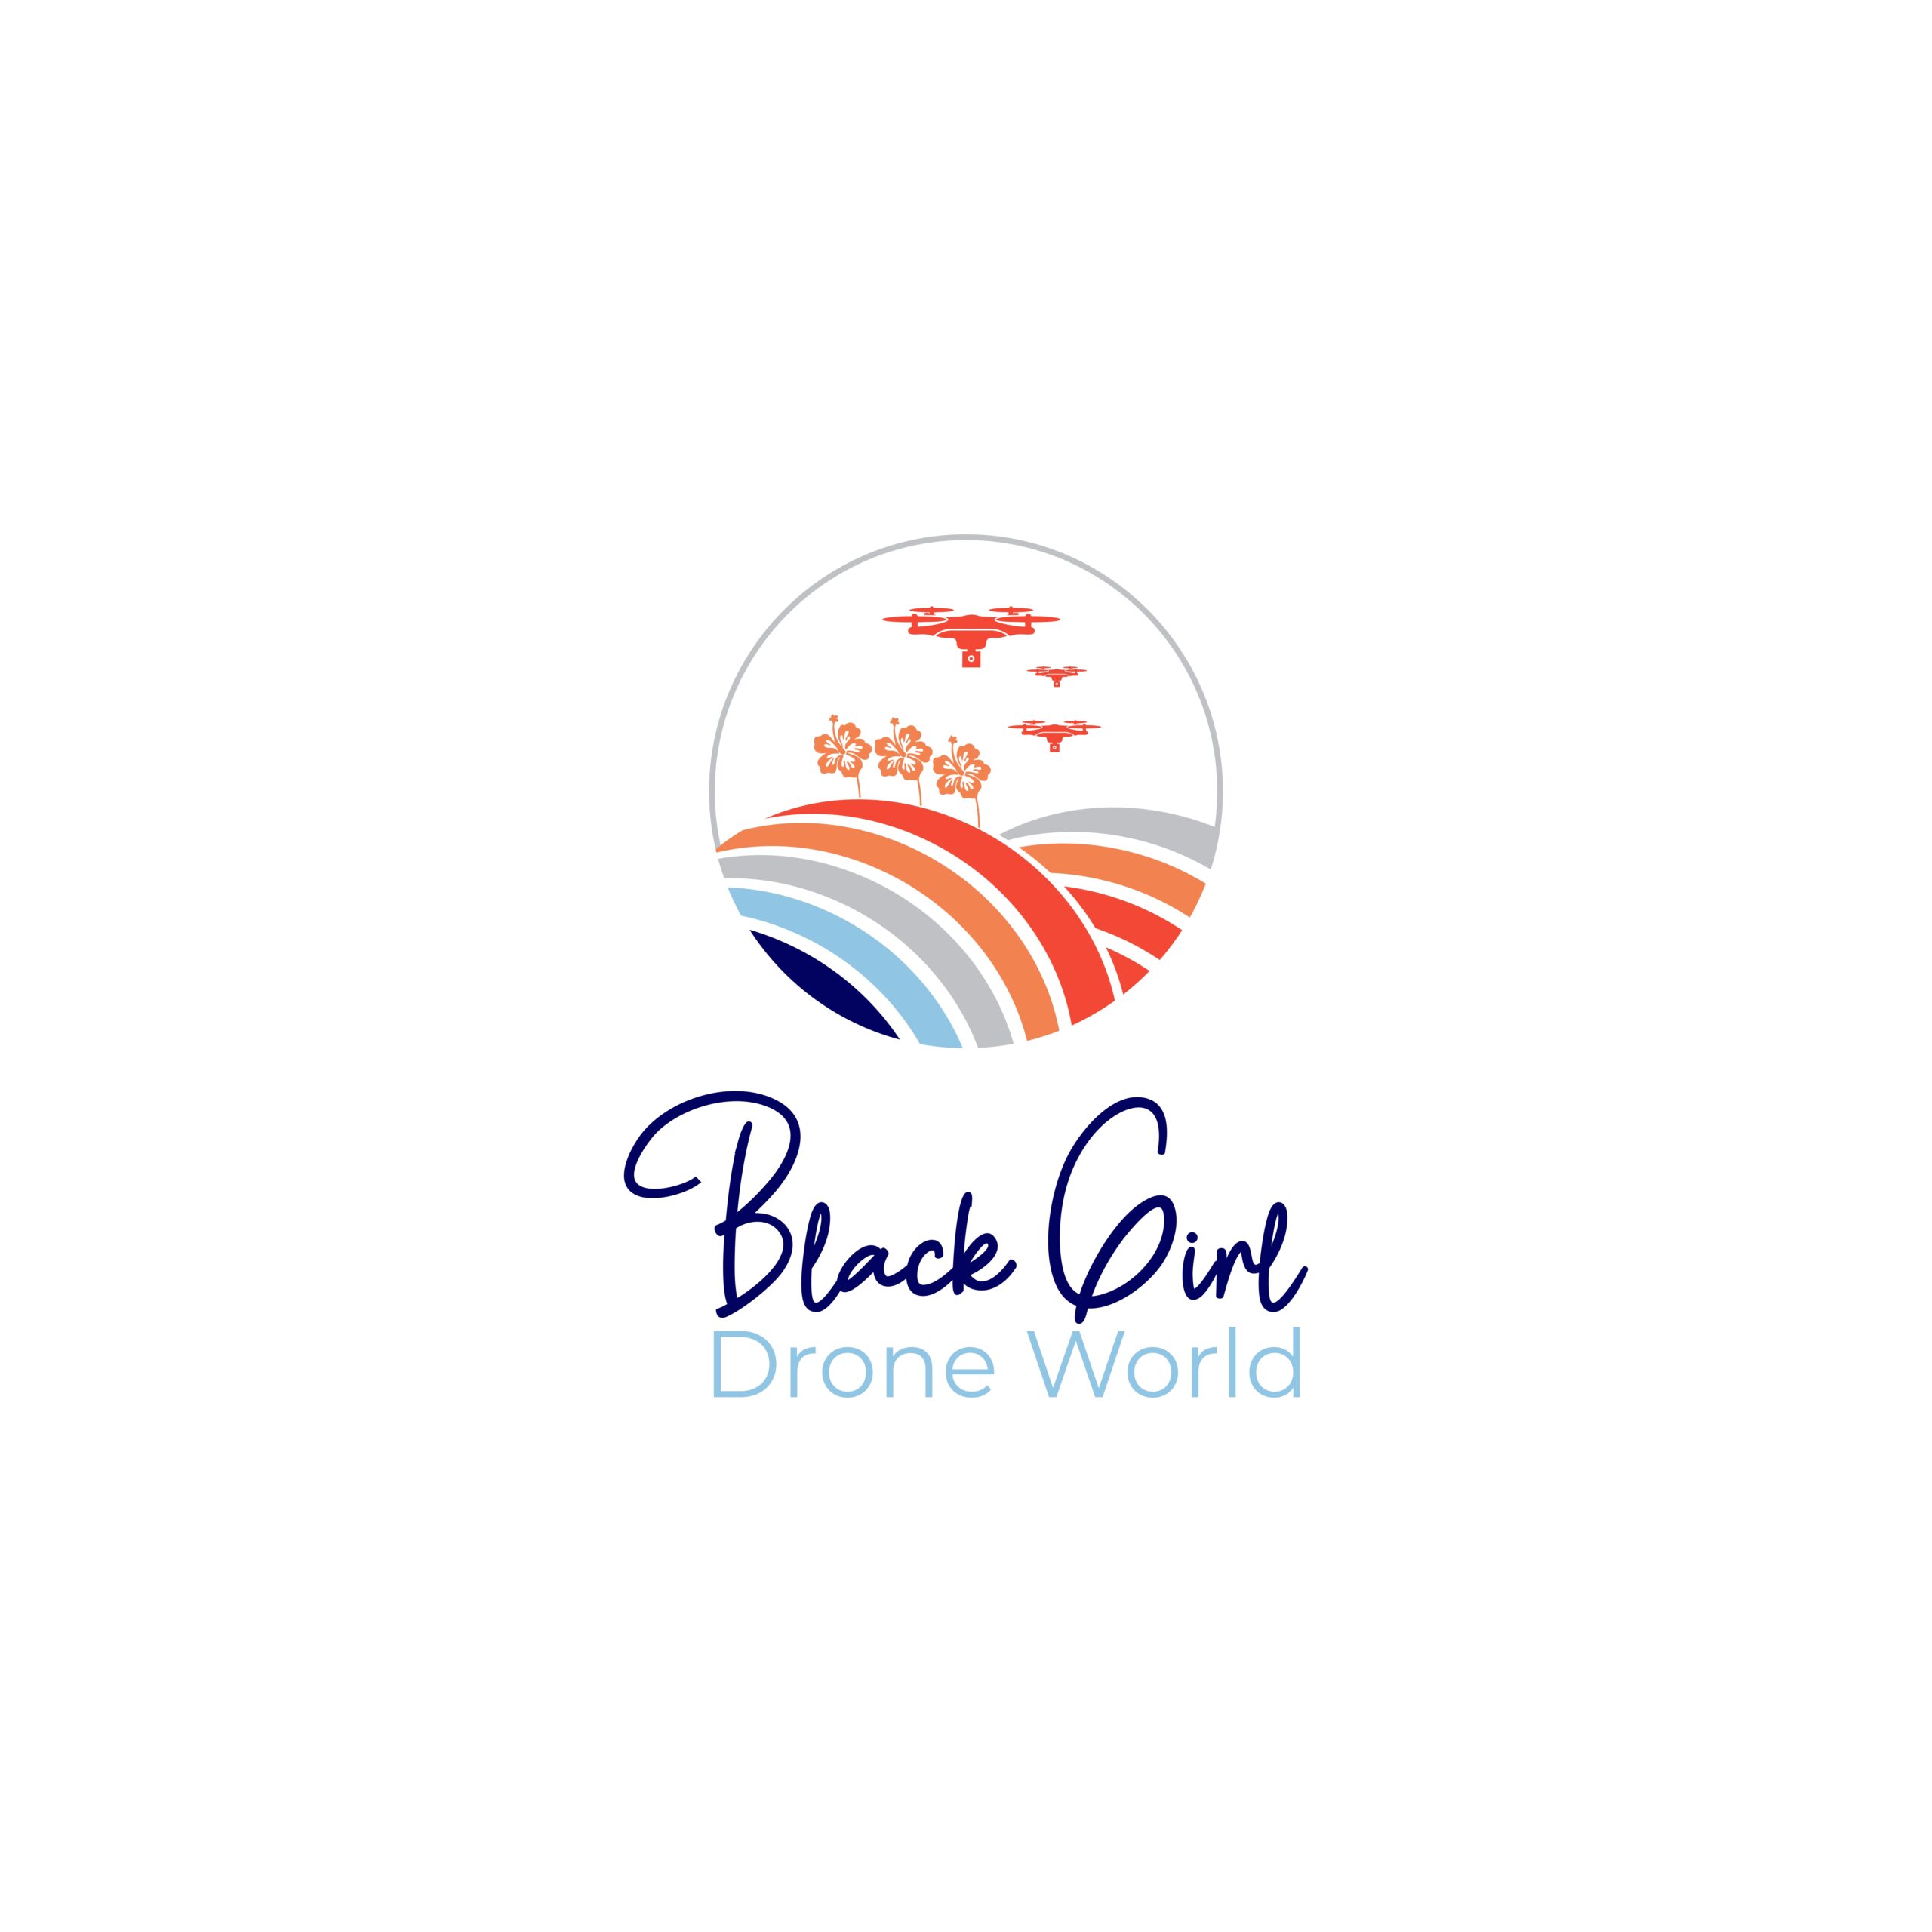 Black Girl Drone World logo